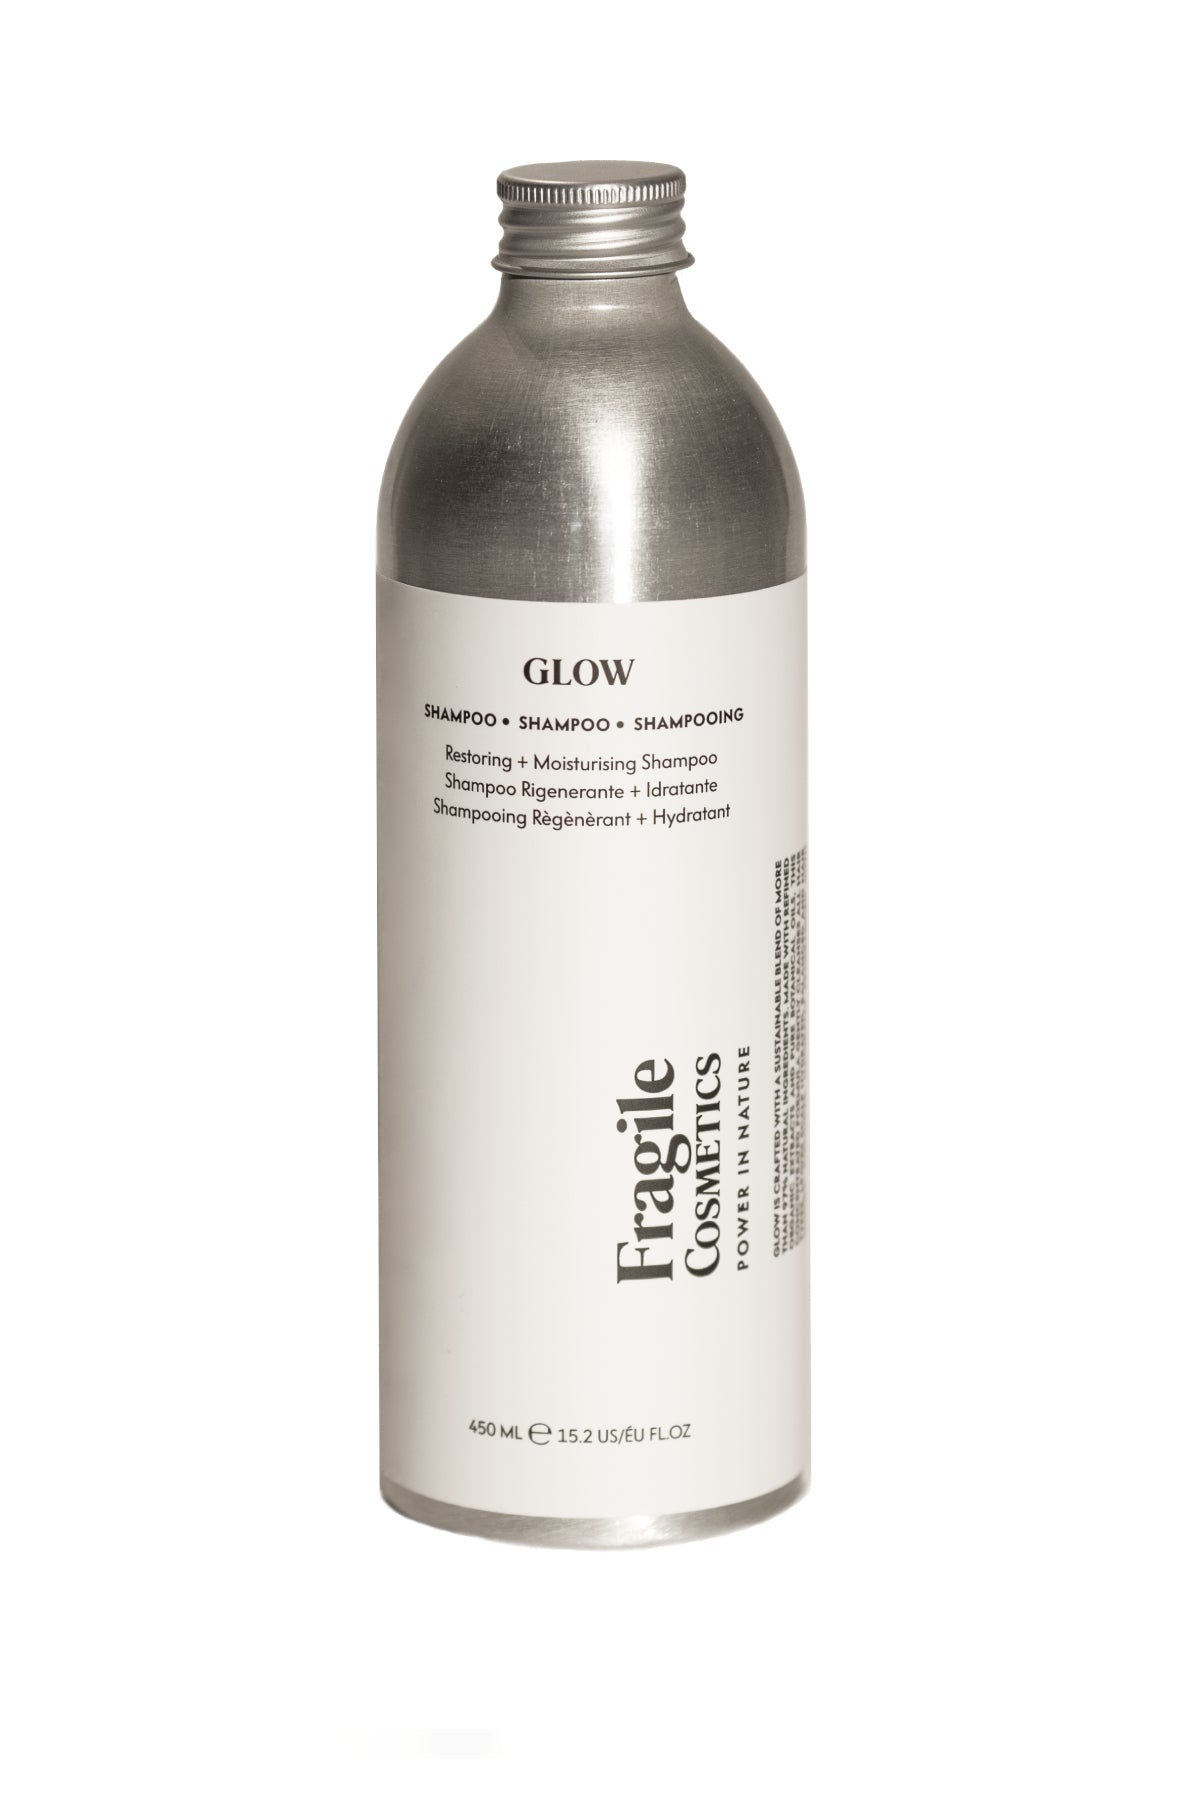 GLOW restorative and moisturizing shampoo